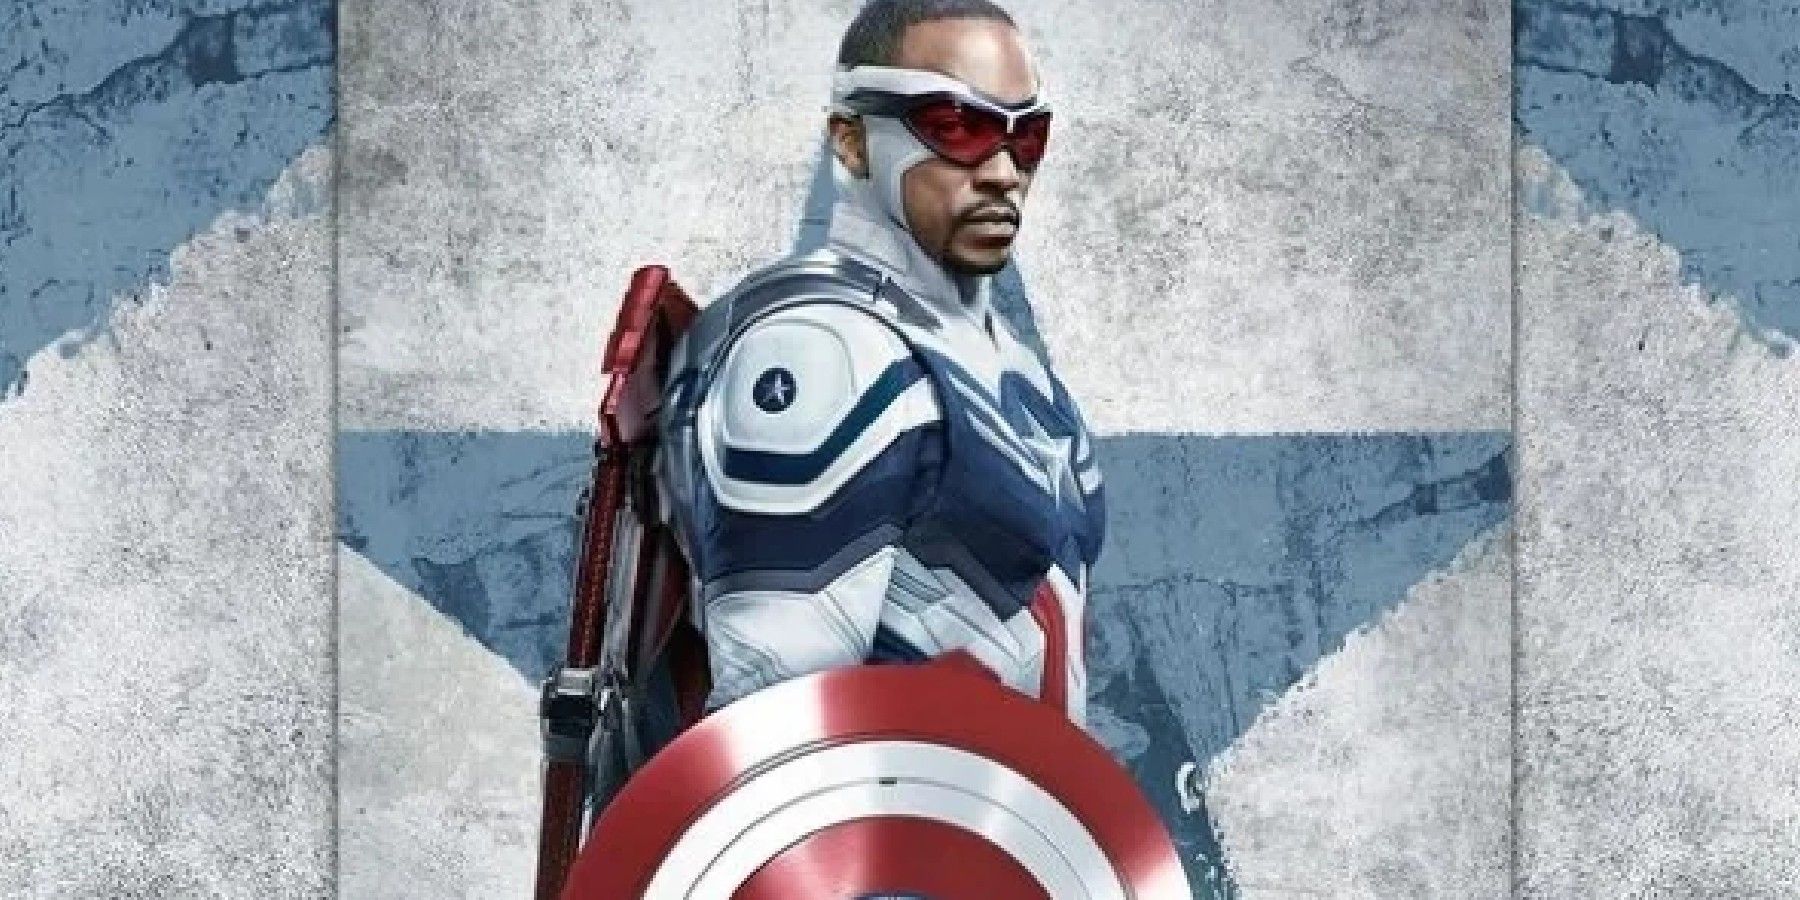 Captain America in his new costume in TFATWS